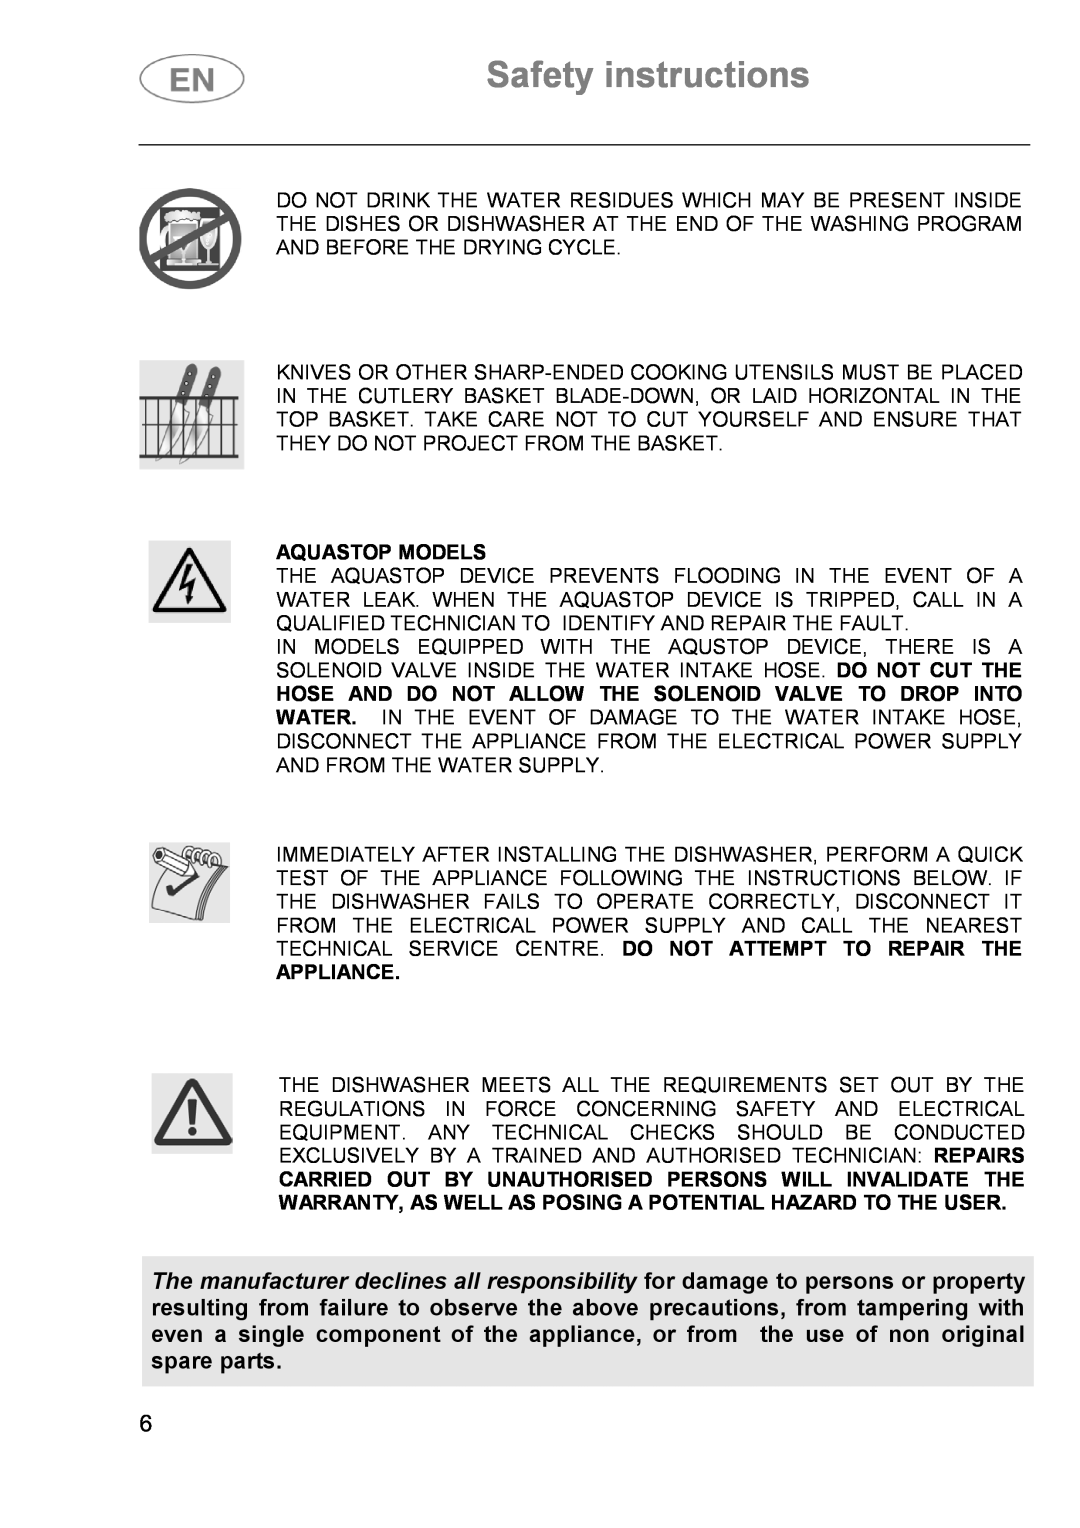 Smeg DI614H instruction manual Safety instructions, Aquastop Models, Appliance 